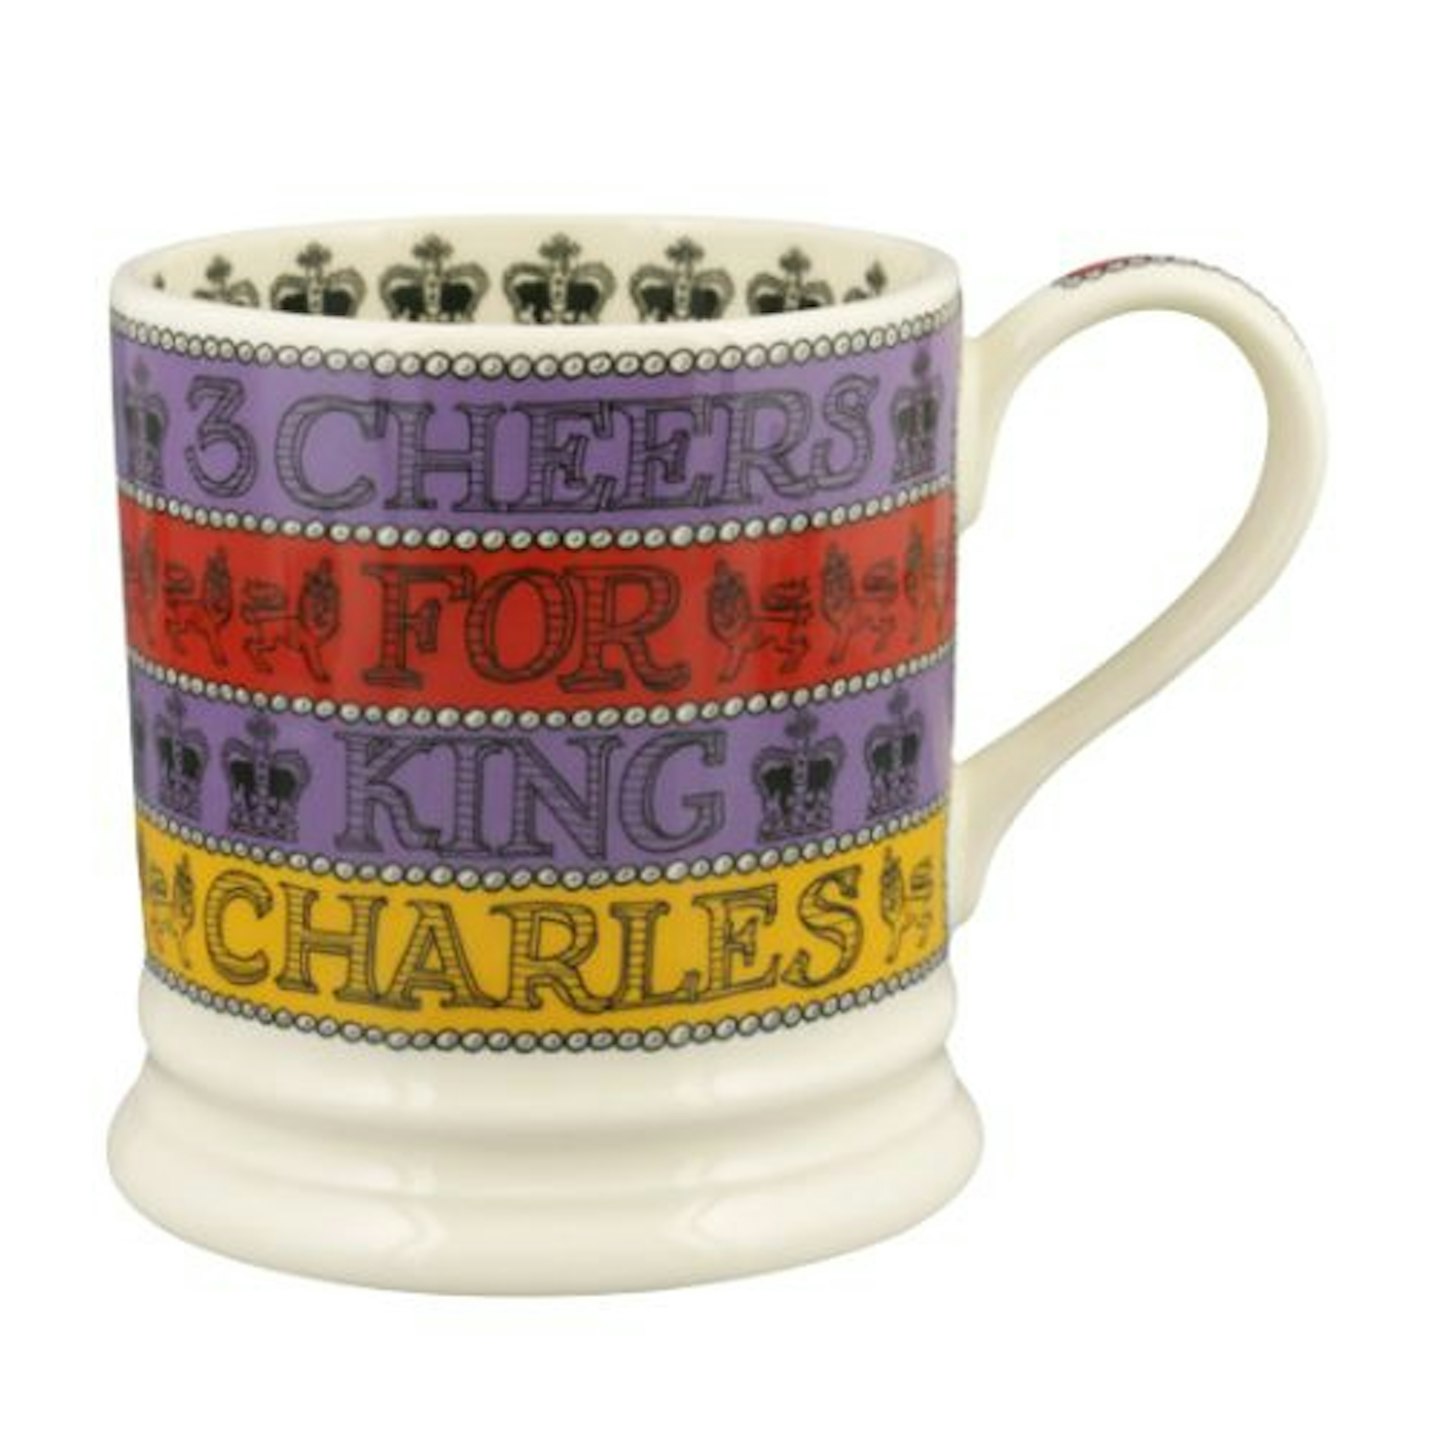 Three Cheers For King Charles III 1 Pint Mug